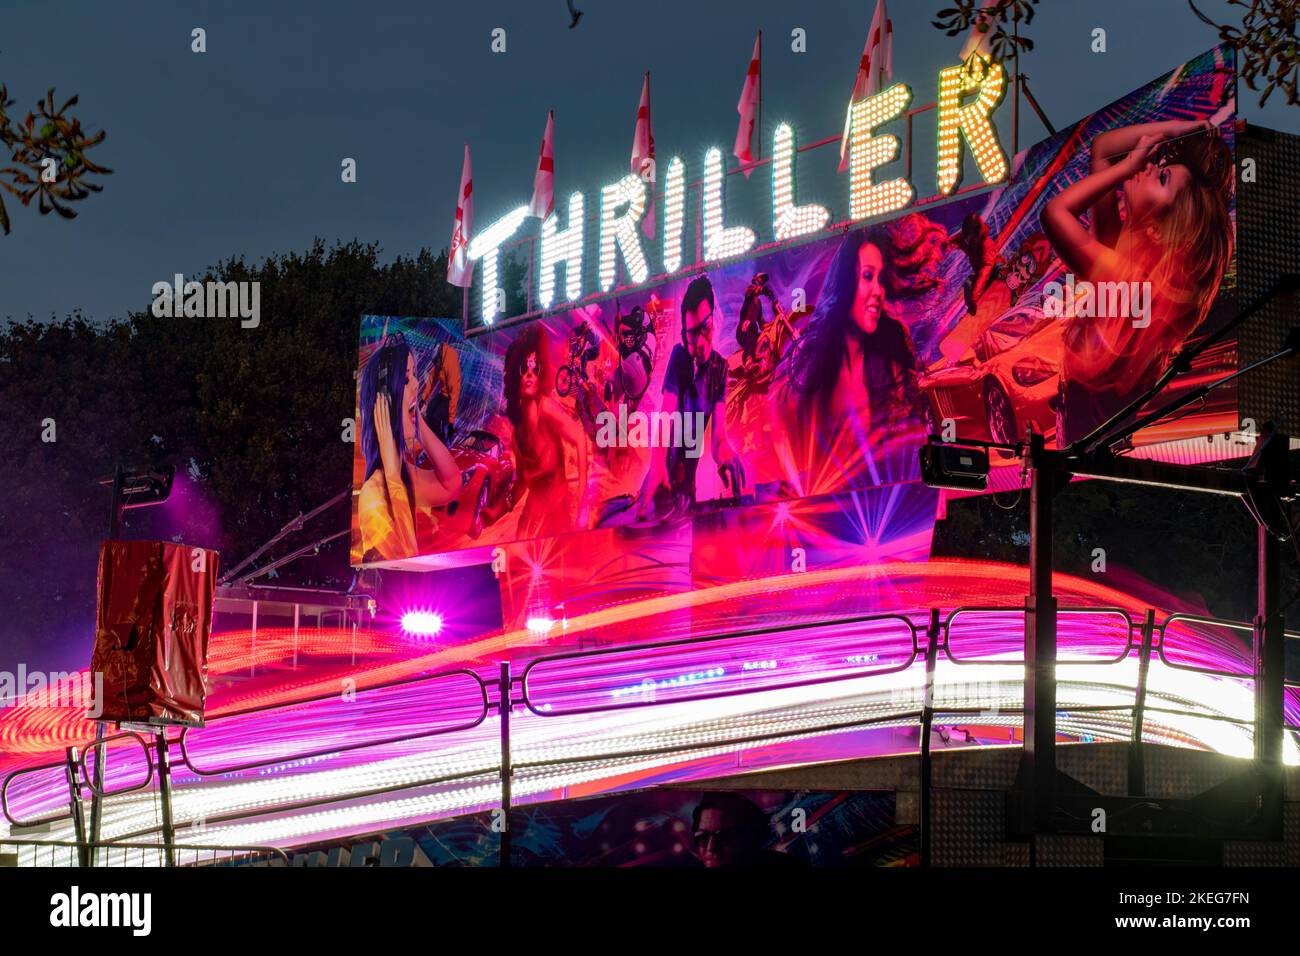 Thriller, Fairground ride in action Stock Photo